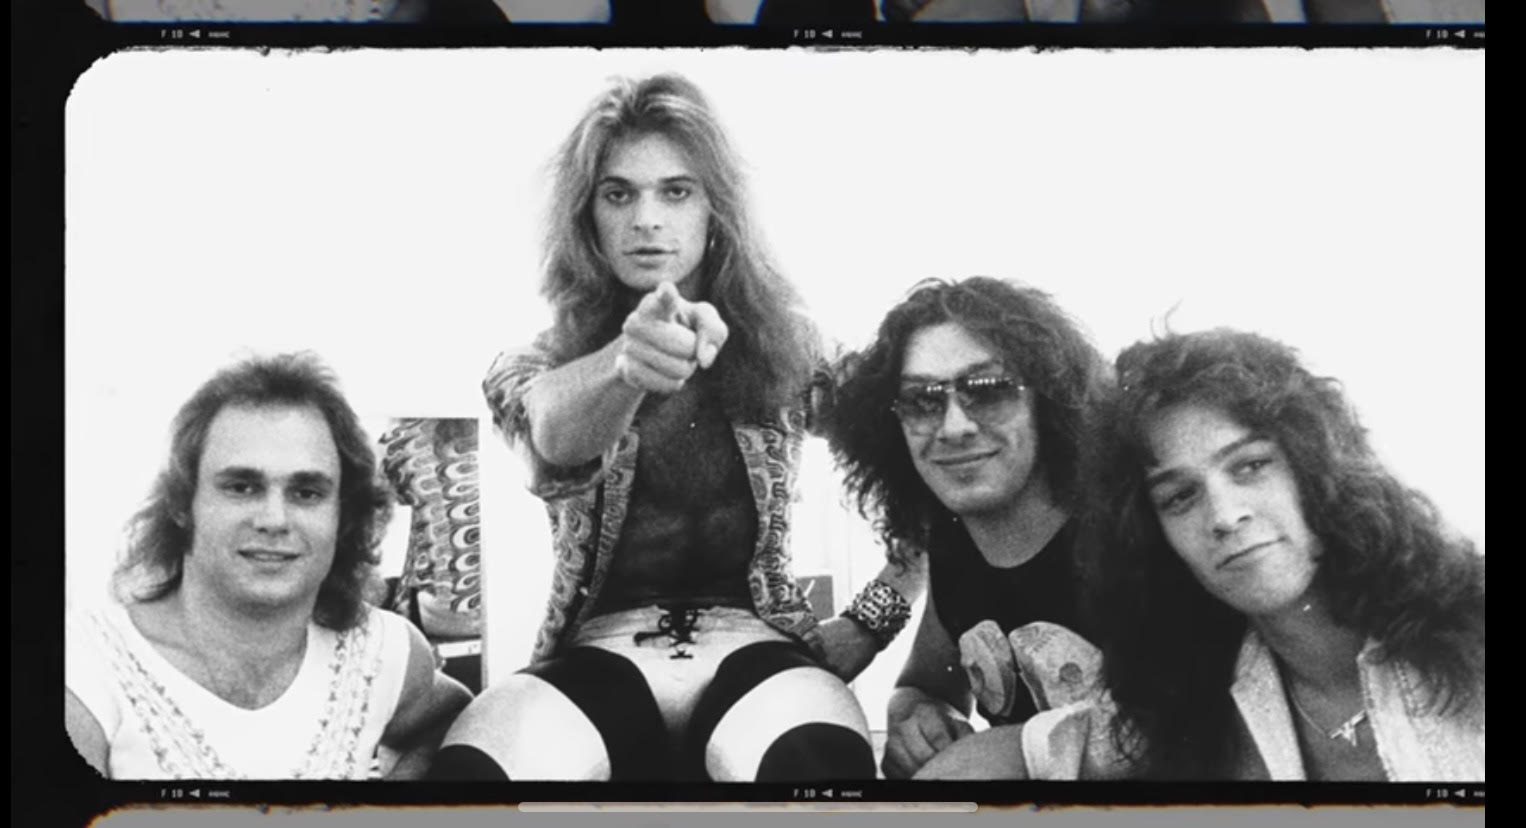 David Lee Roth Releases New Song About Van Halen